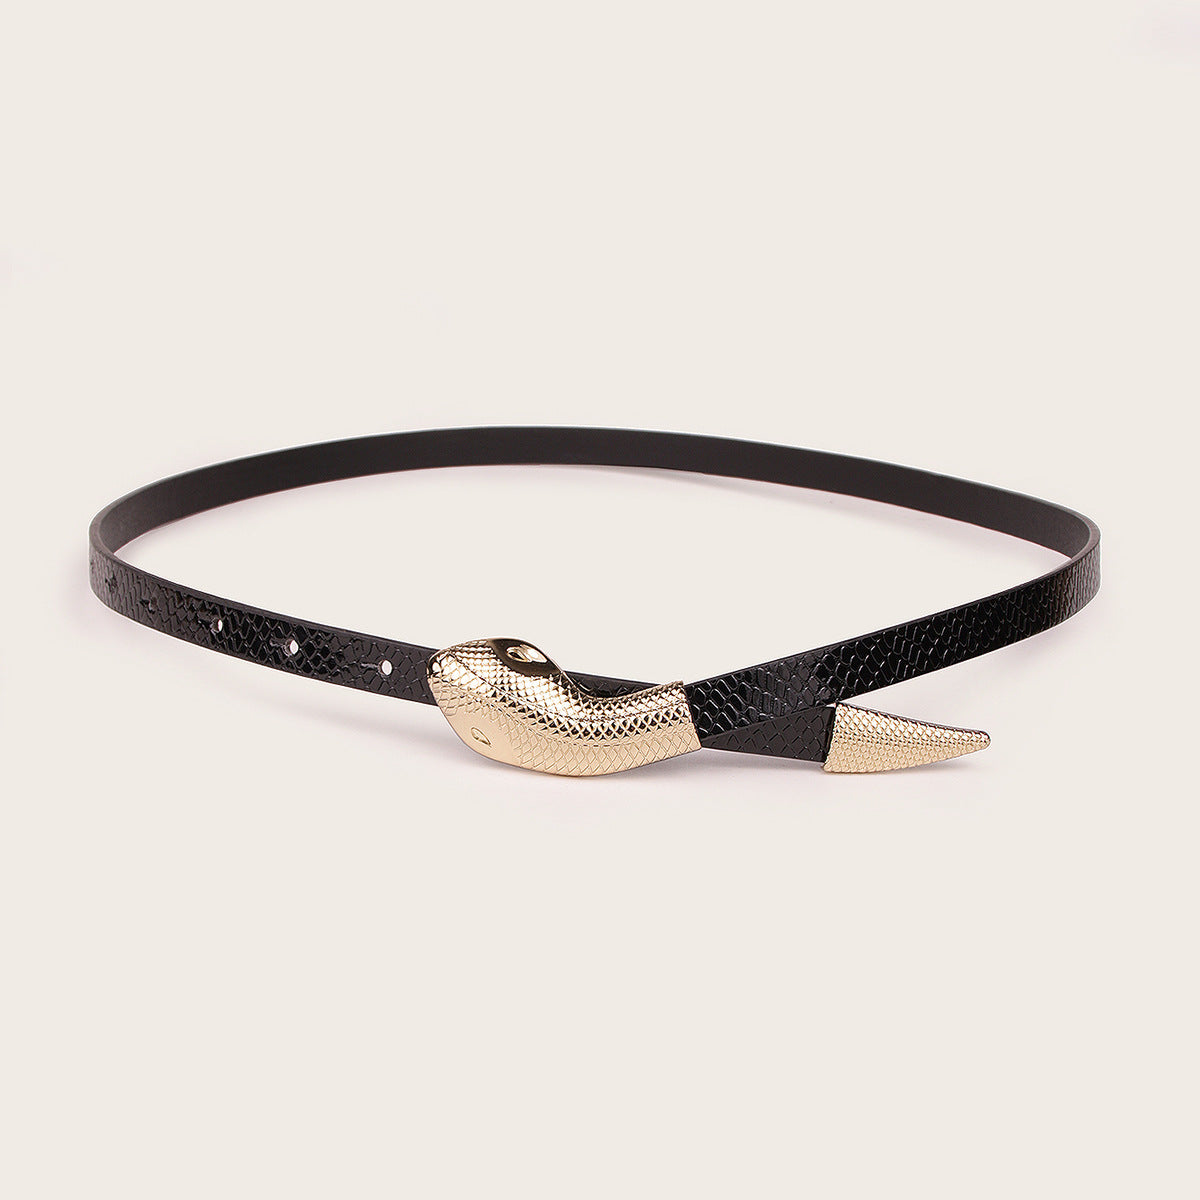 Leather Snakeskin Snap Belt